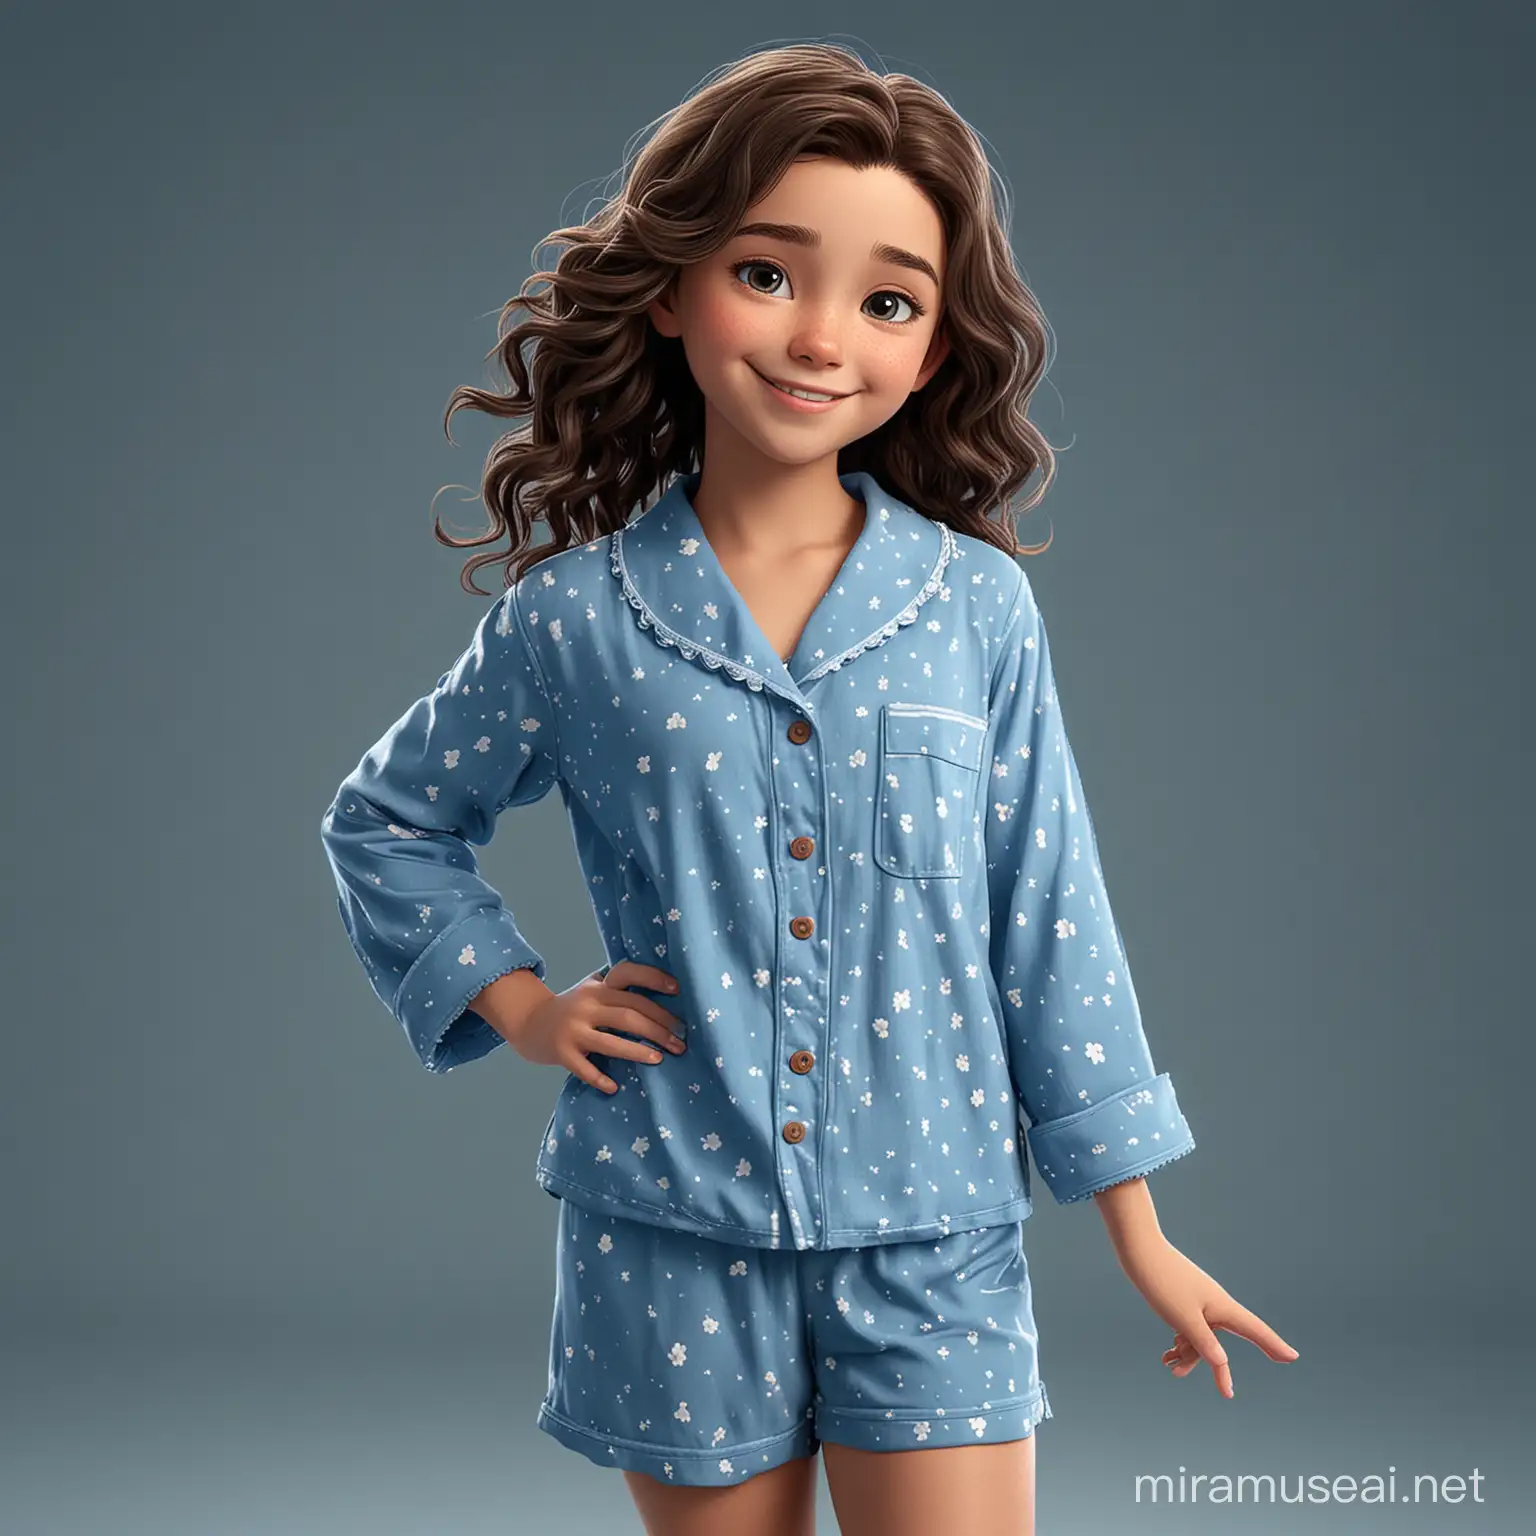 Joyful Preteen Girl in Blue Pajamas with Wavy Hair